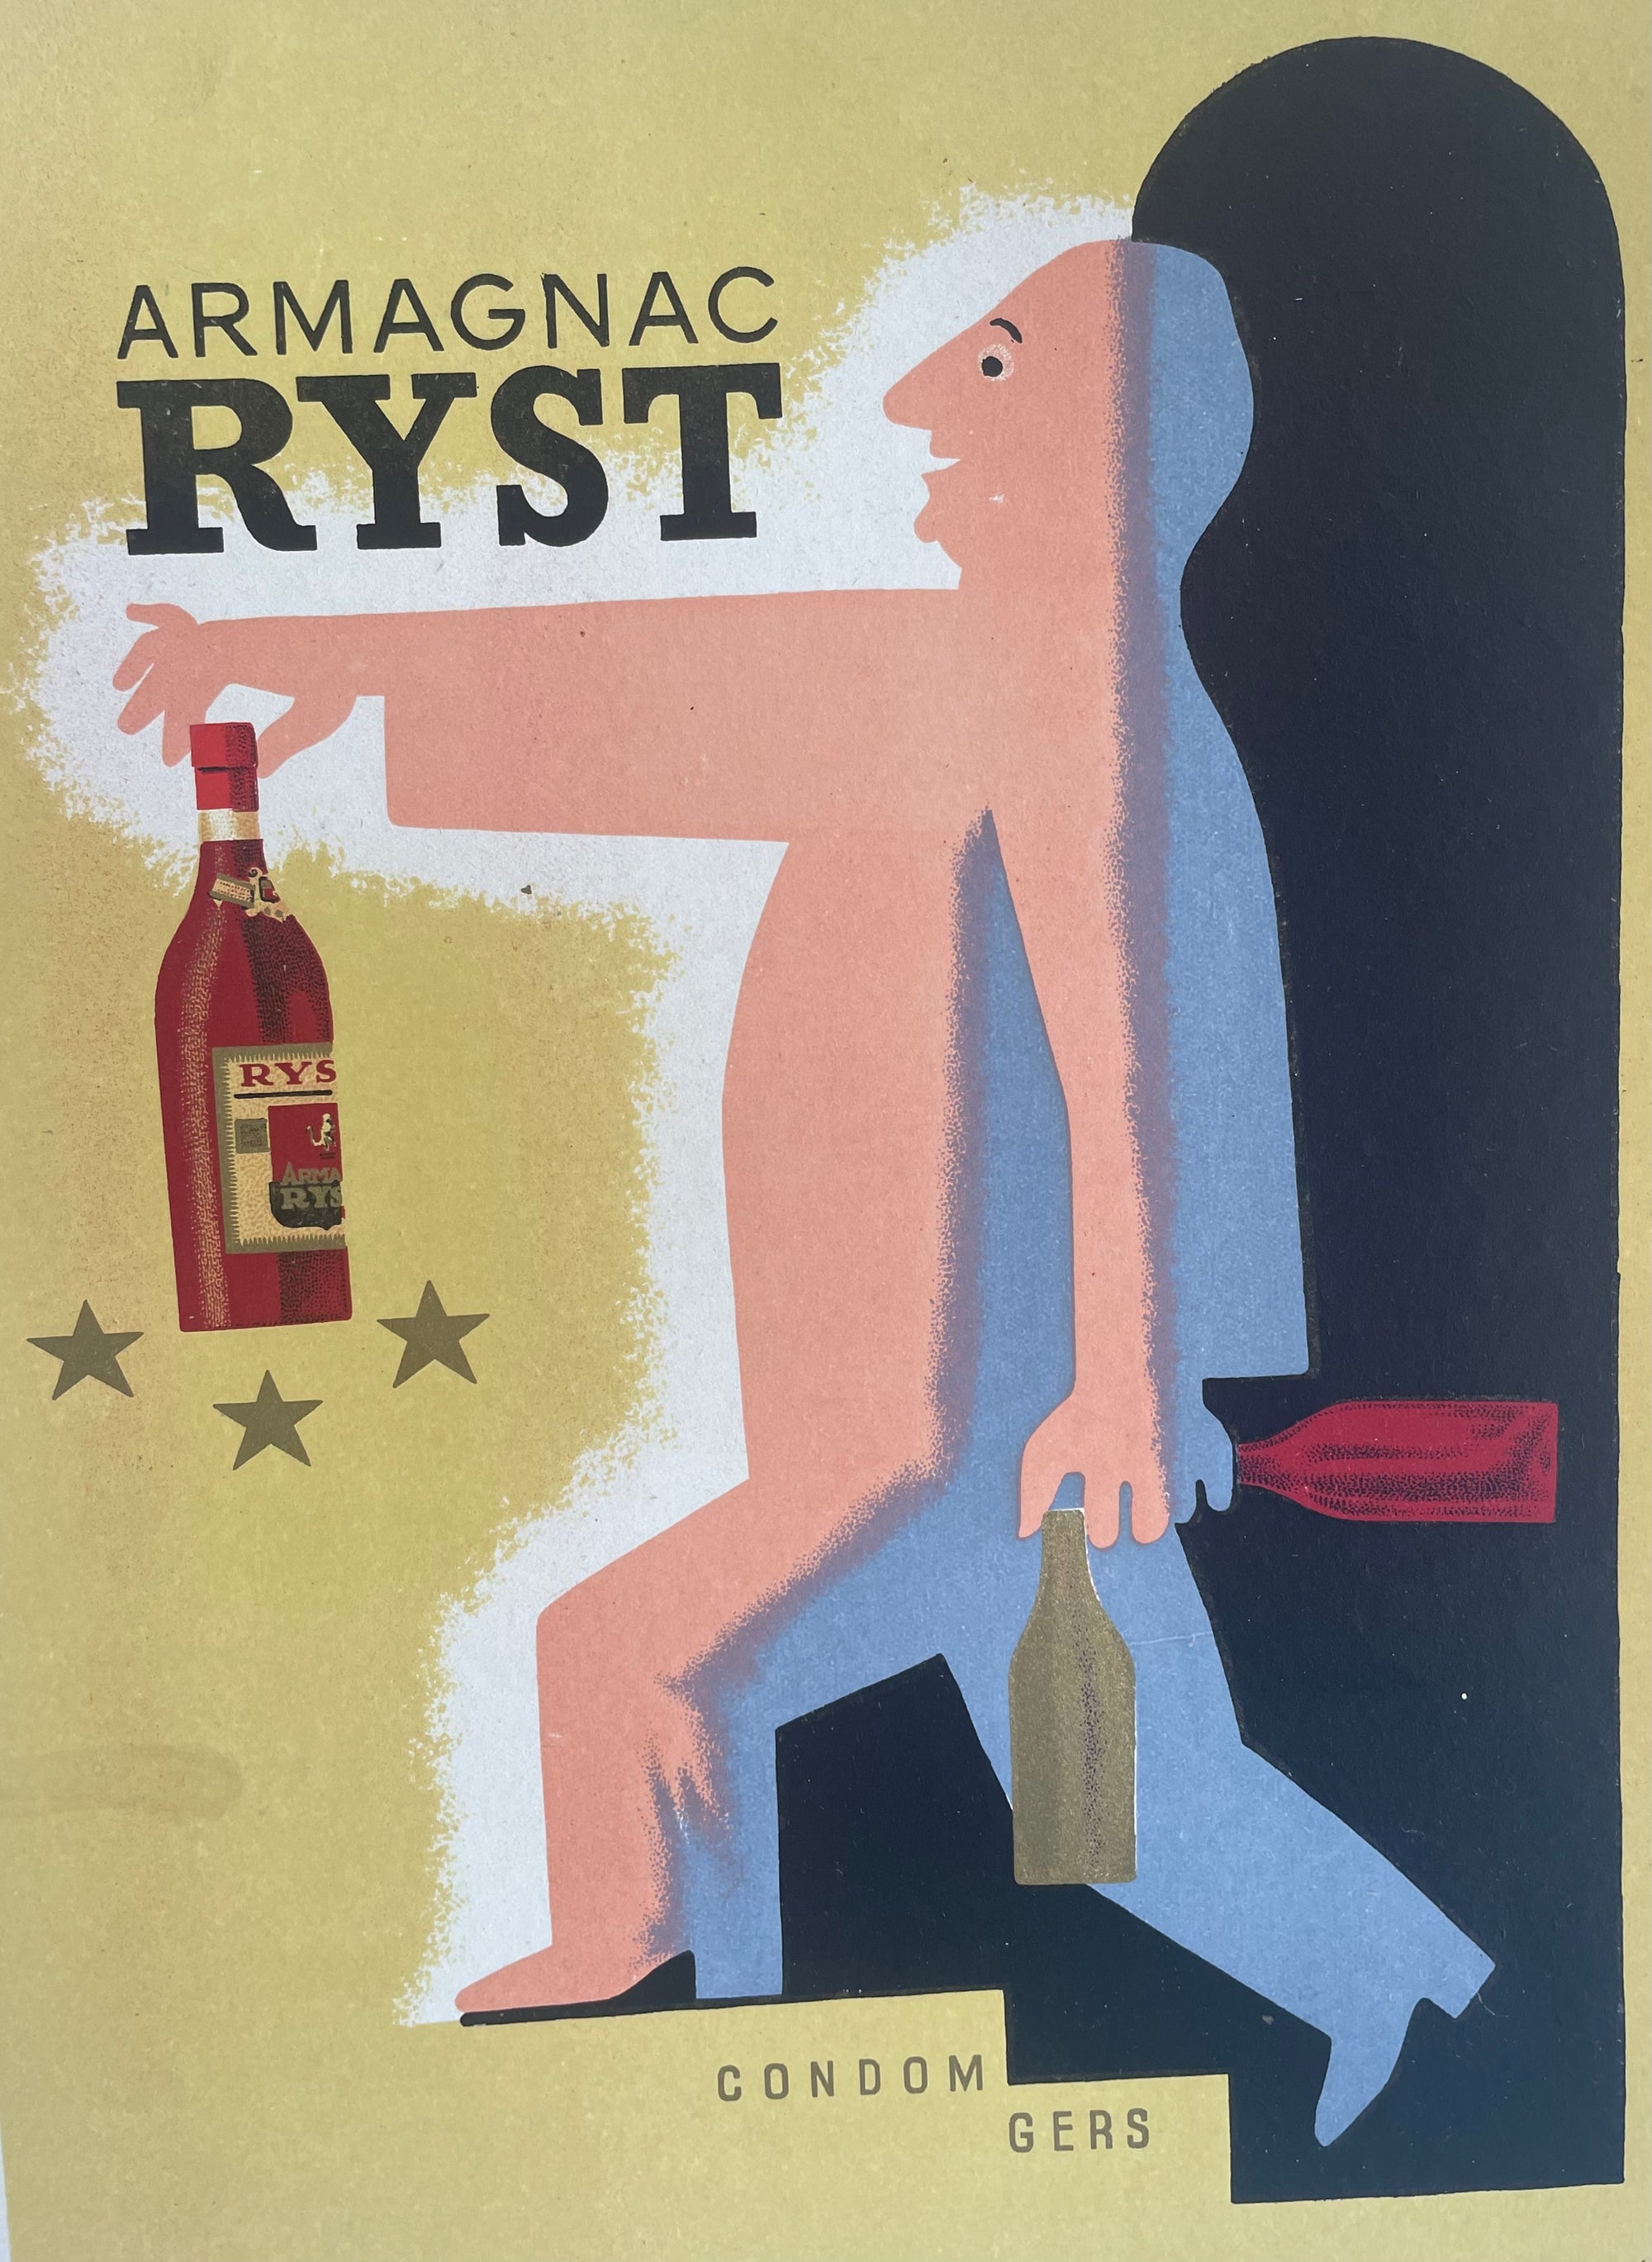 Armagnac Ryst by Raymond Savignac (Small)